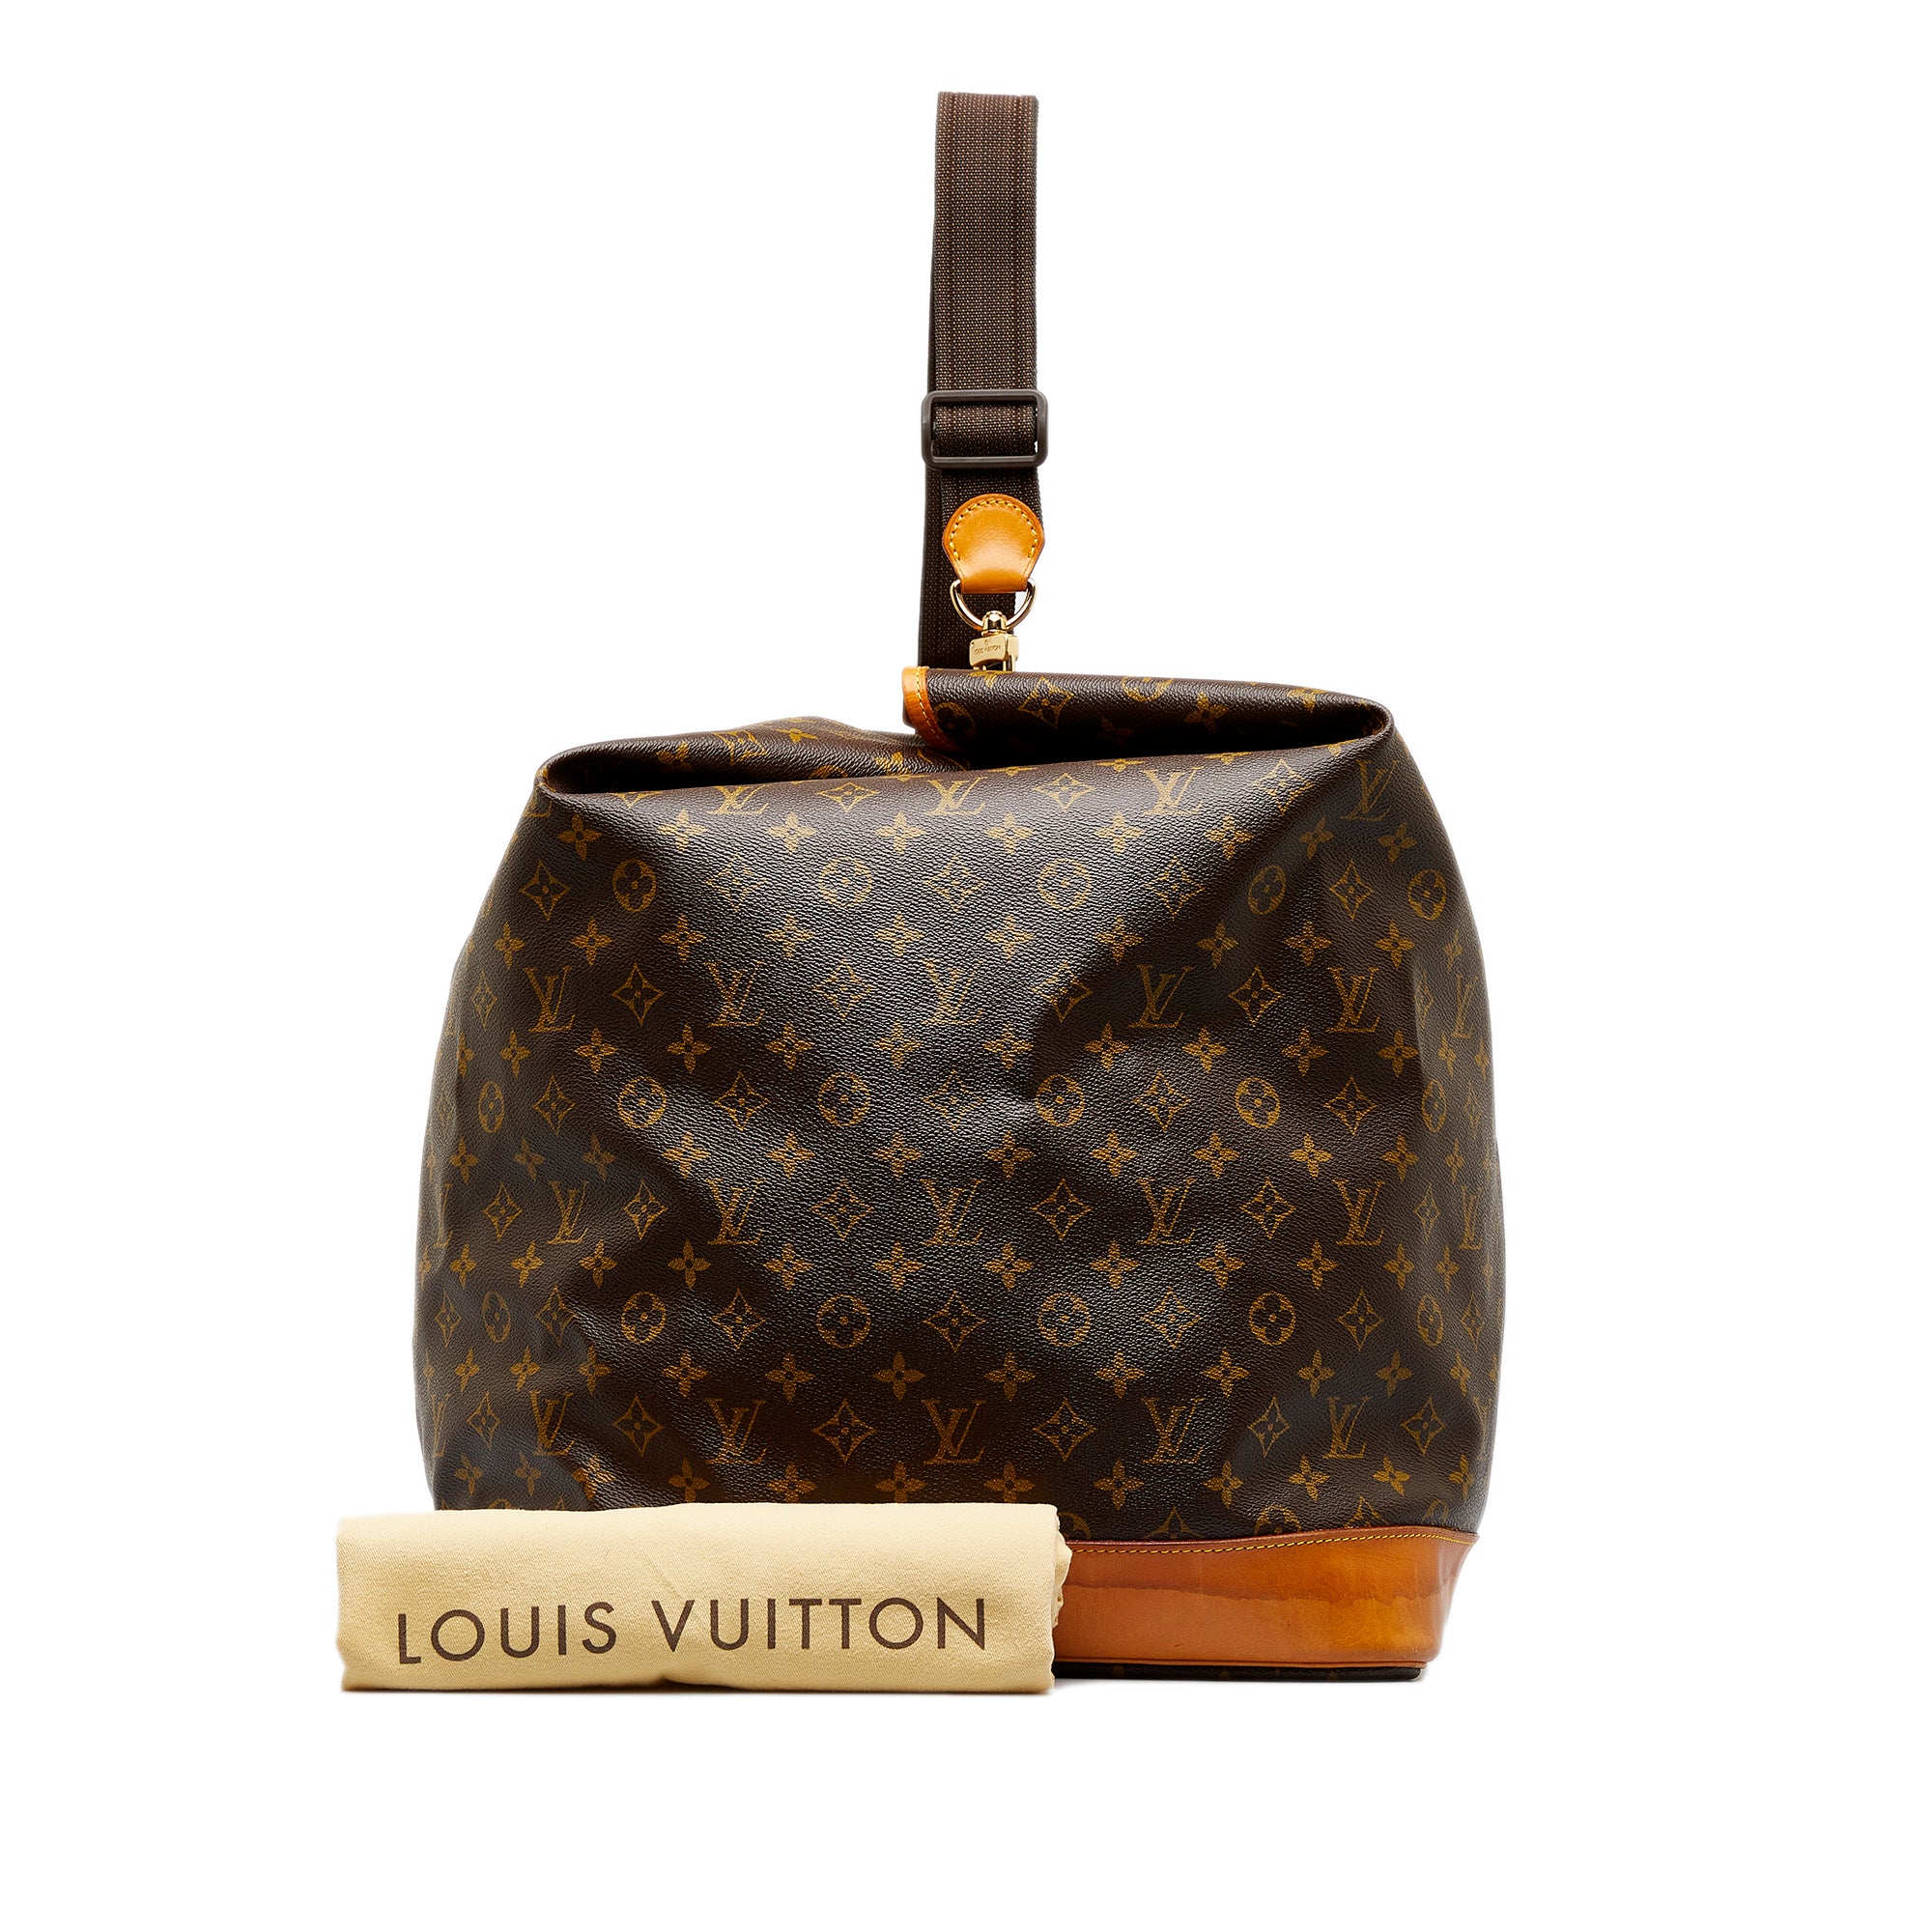 Louis Vuitton Neverfull Handbags for sale in Zürich, Switzerland